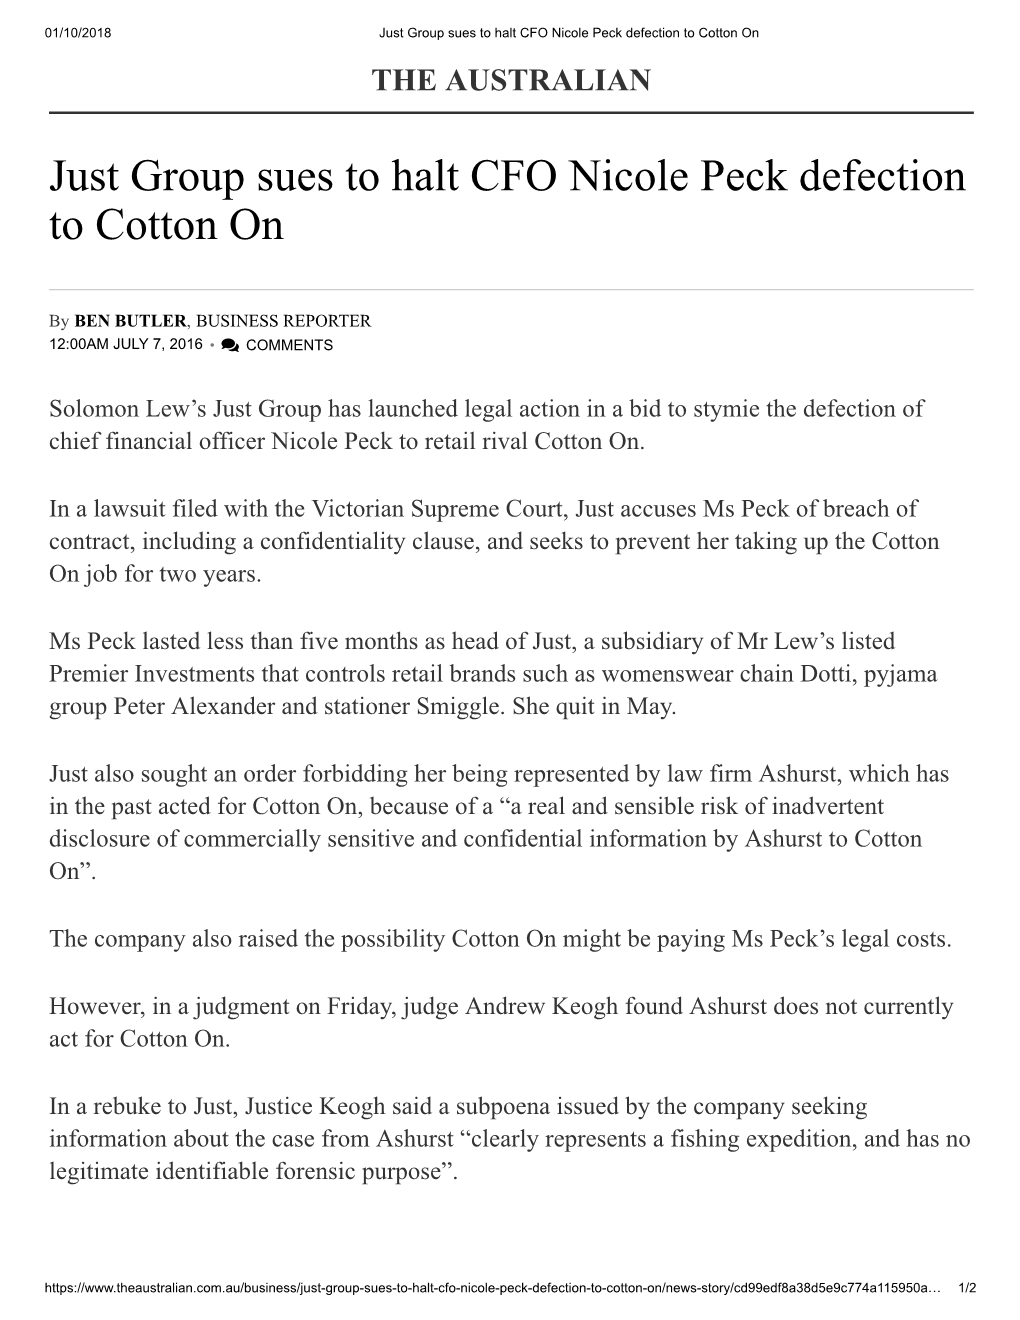 Just Group Sues to Halt CFO Nicole Peck Defection to Cotton on the AUSTRALIAN